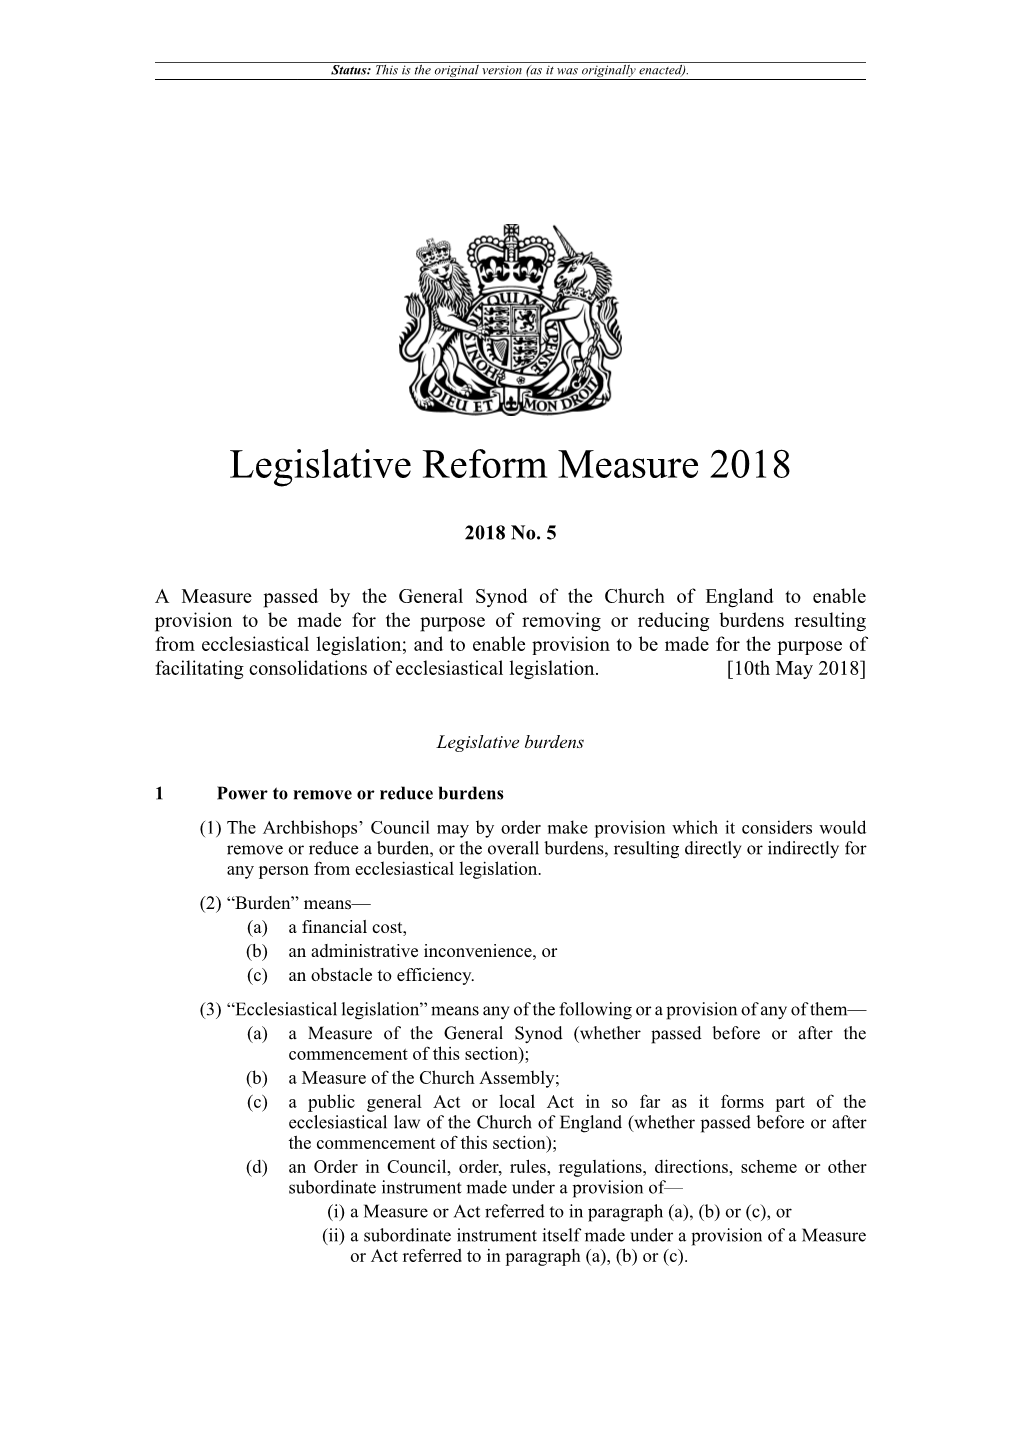 Legislative Reform Measure 2018